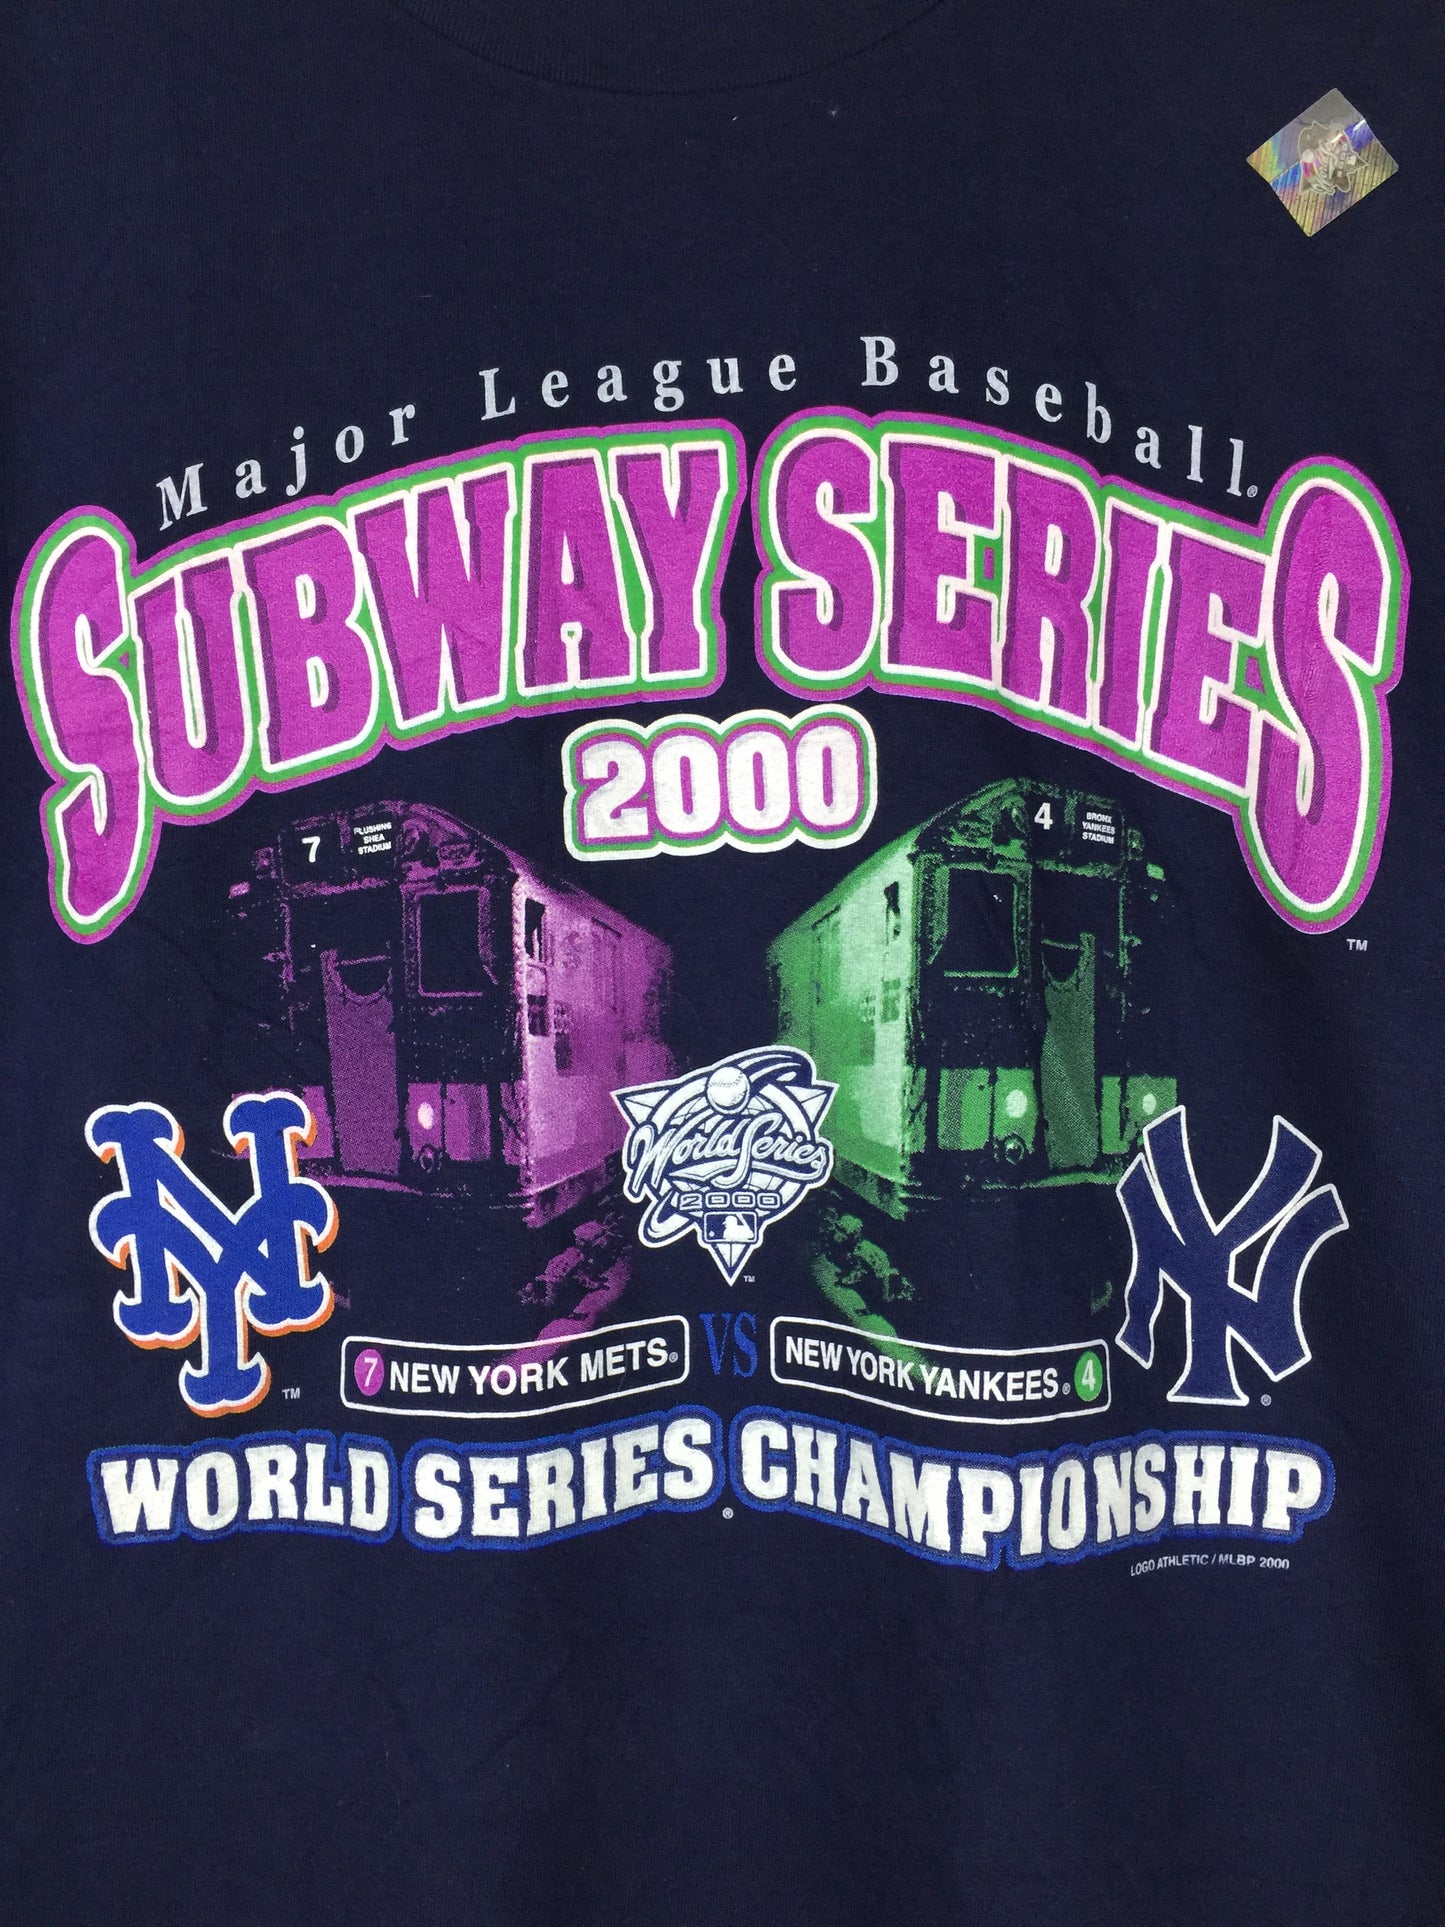 Vintage Yankees vs Mets "Subway Series" 2000 MLB T-shirt